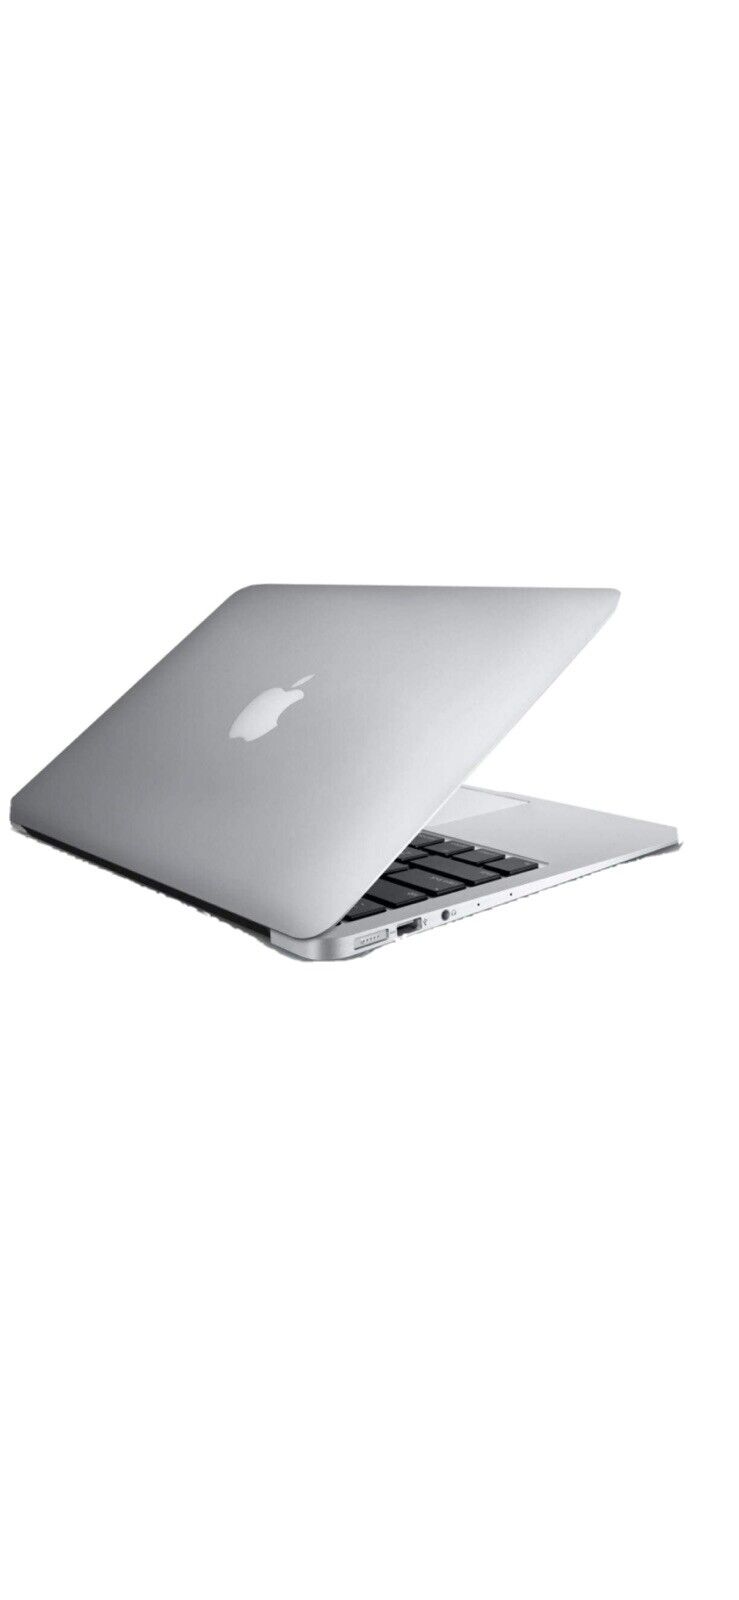 Macbook Air 13" 1.3 GHz i5 8GB RAM 250 GB SSD - MacOS Monterey